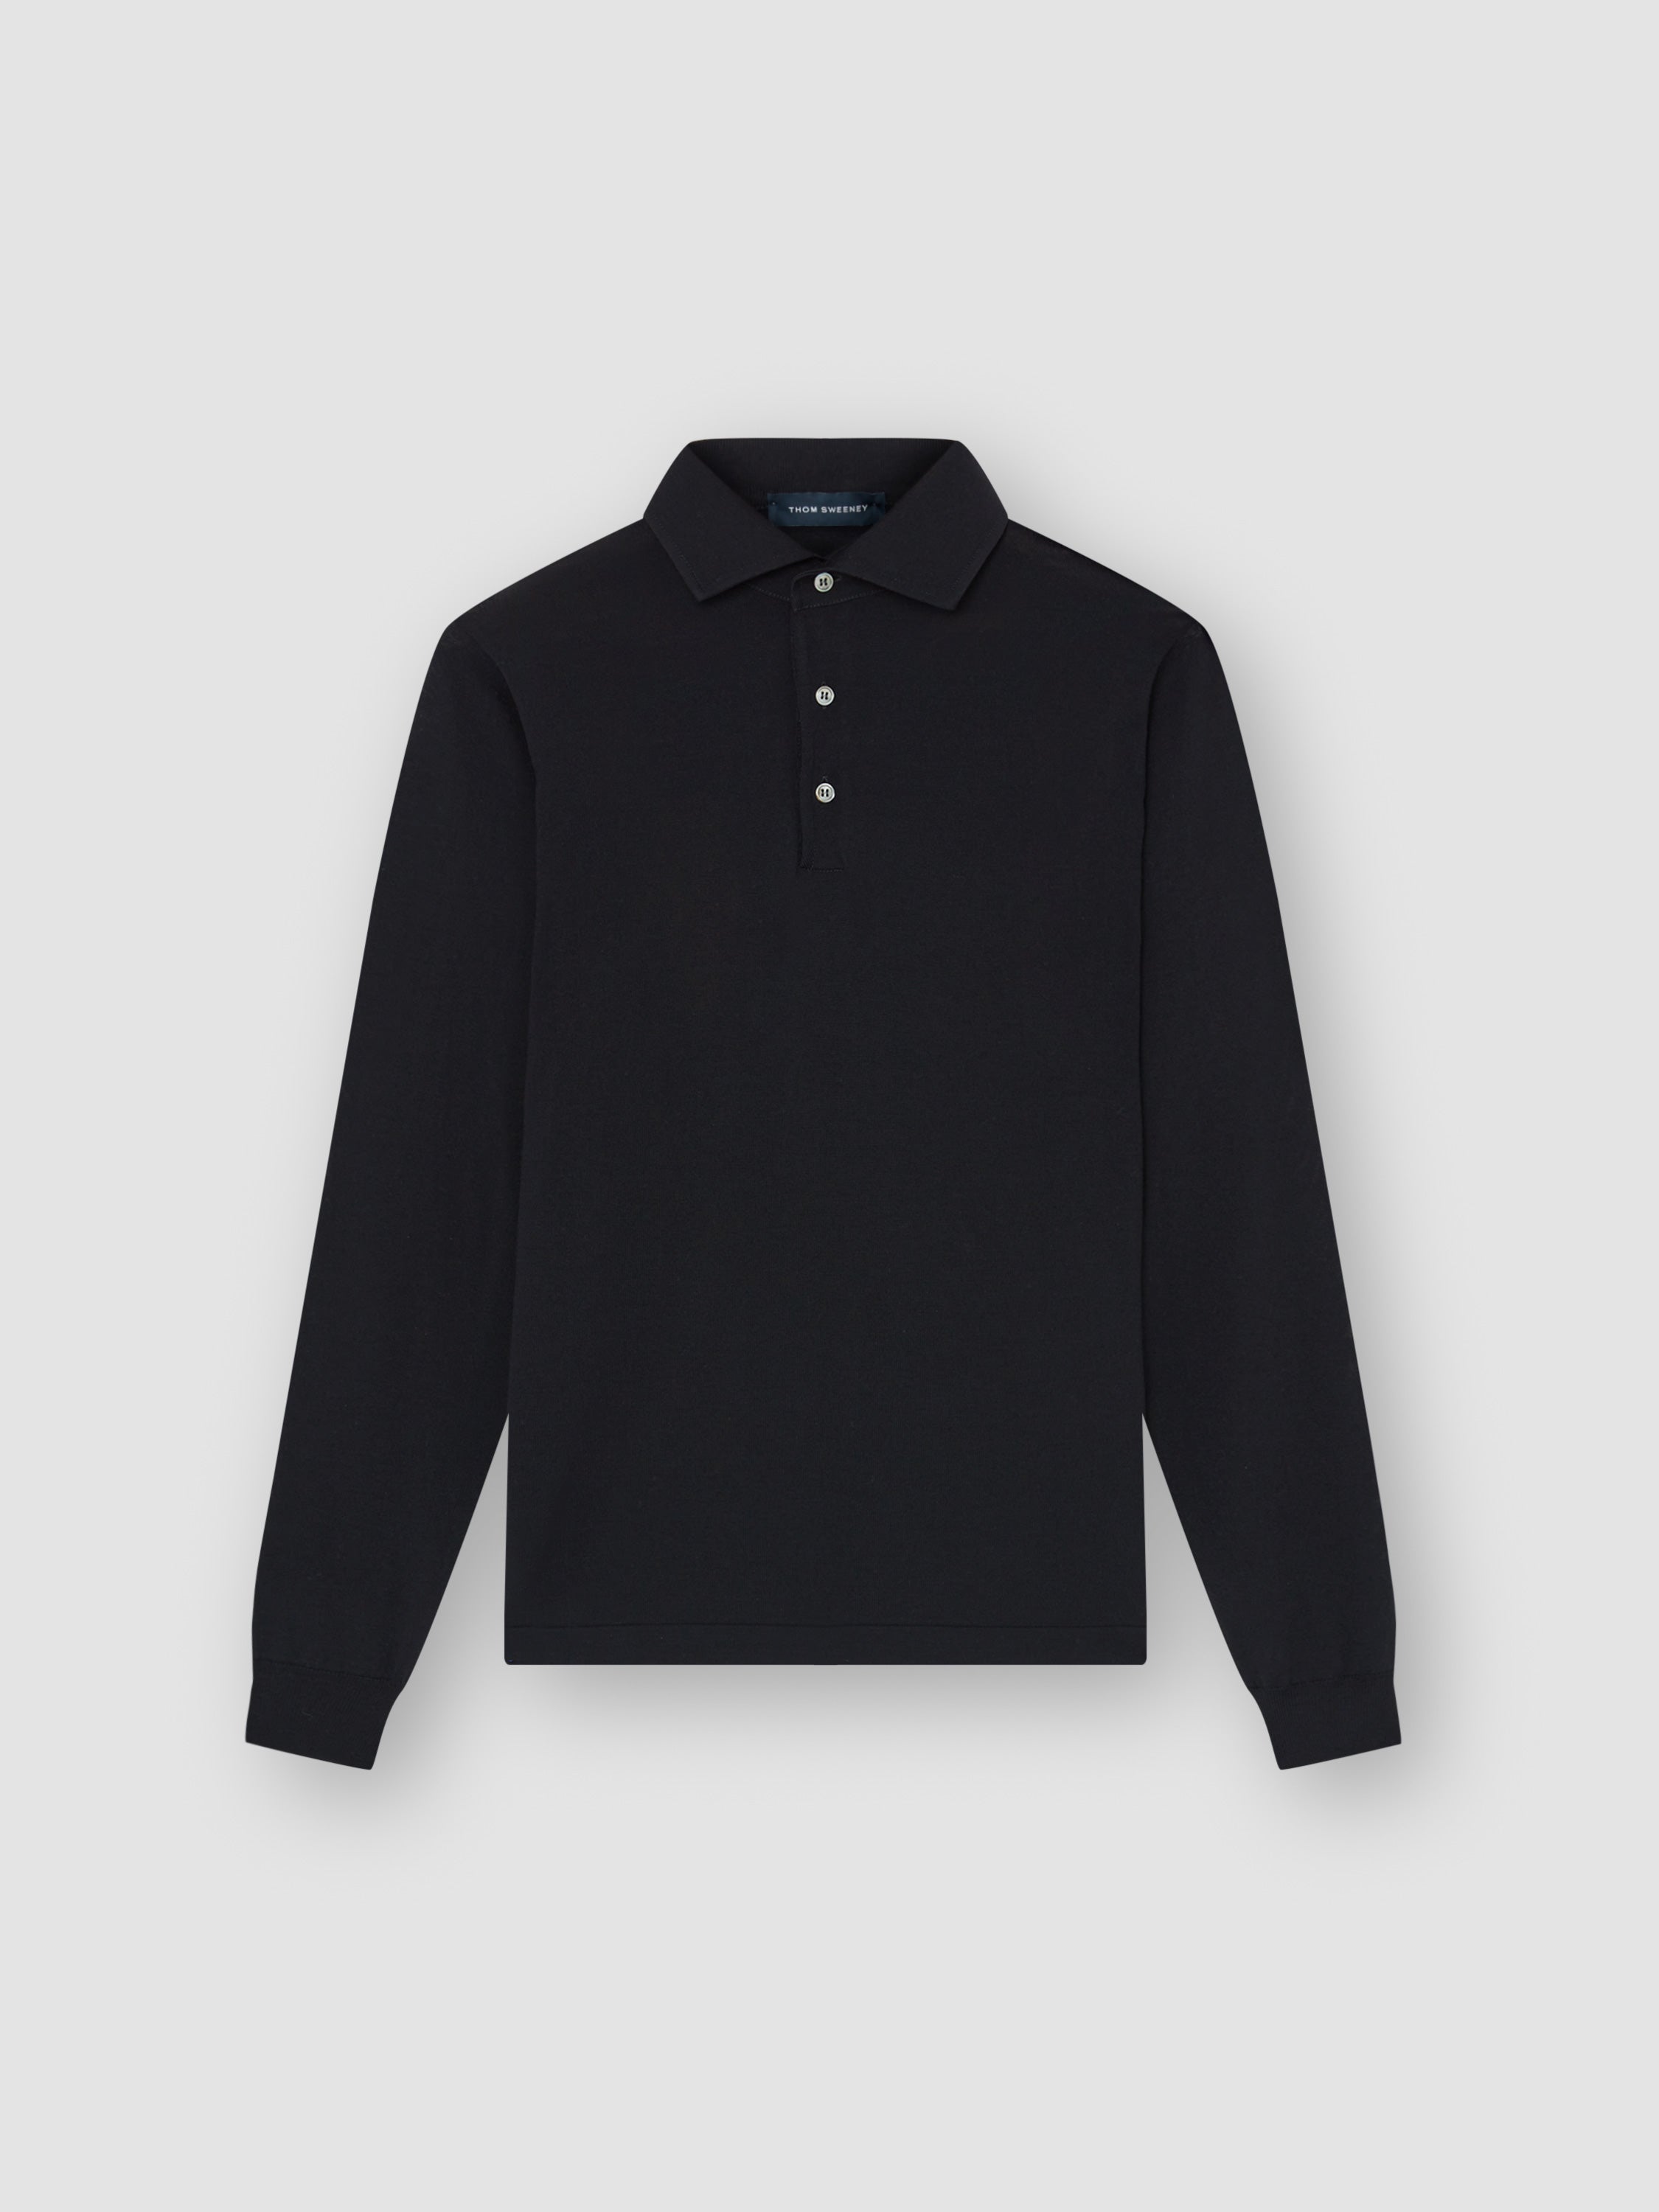 Merino Wool Extrafine Long Sleeve Polo Shirt Navy Product Image